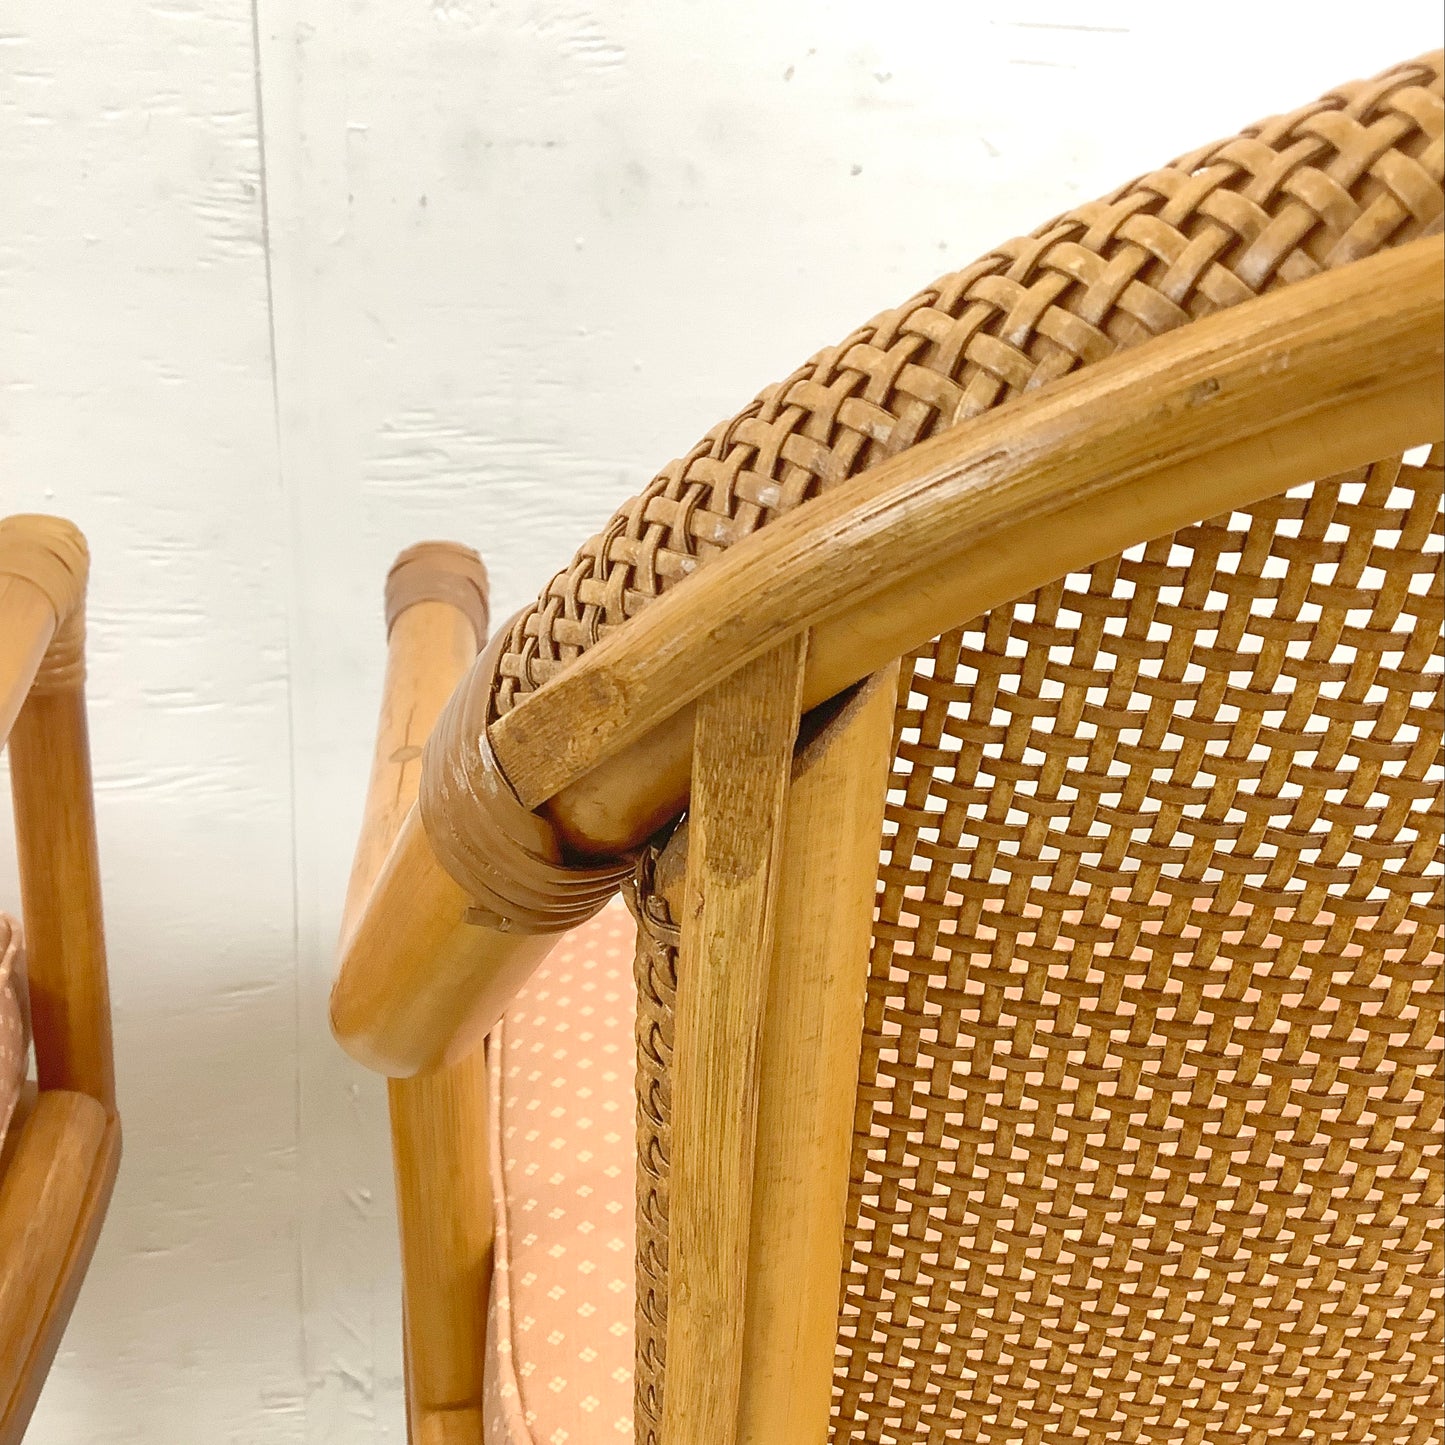 Vintage Modern Rattan Swivel Chairs- Four